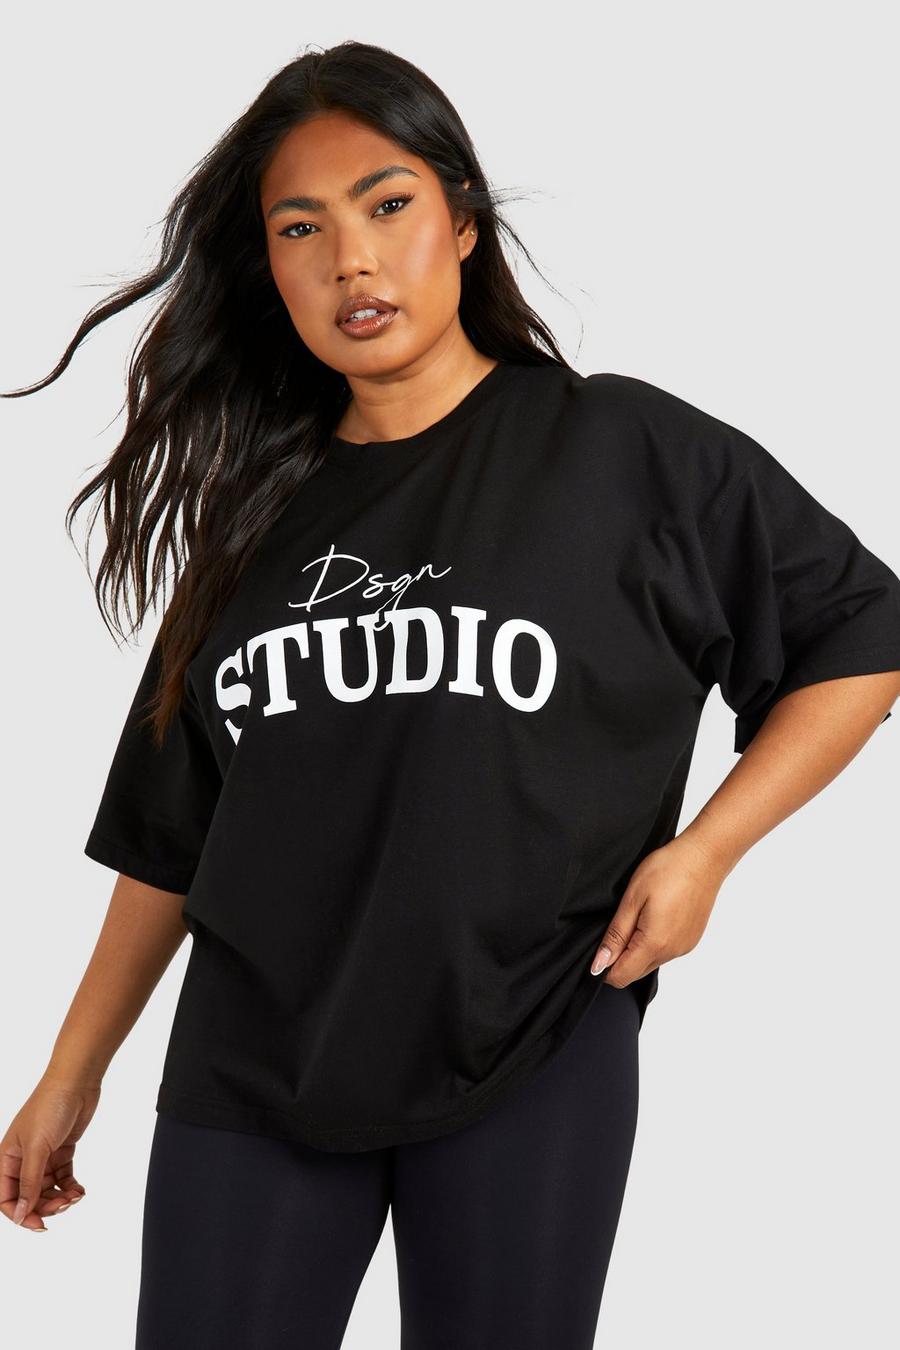 Plus Oversize T-Shirt mit Dsgn Studio Schriftzug, Black